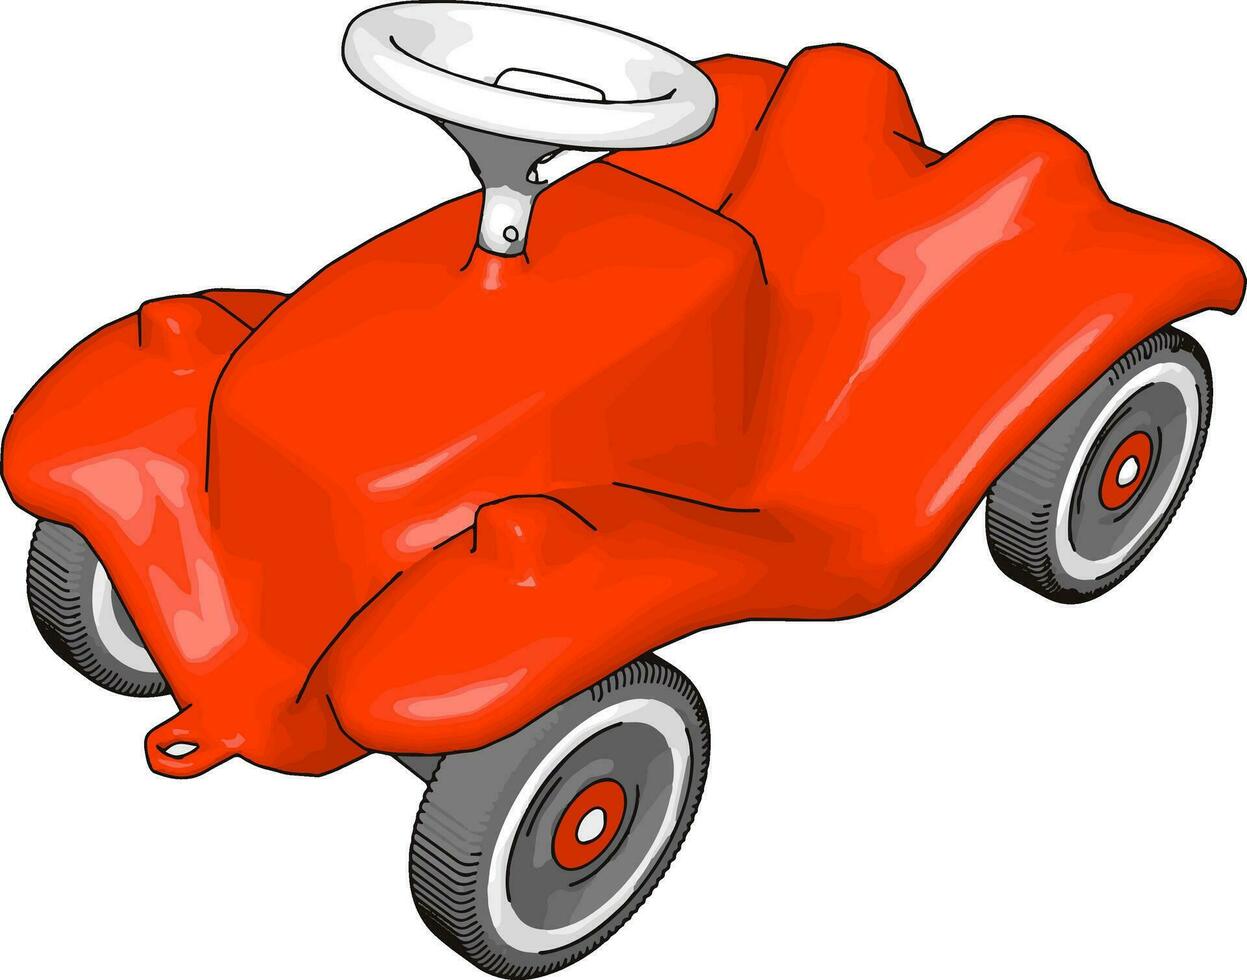 Red kids car, illustration, vector on white background.